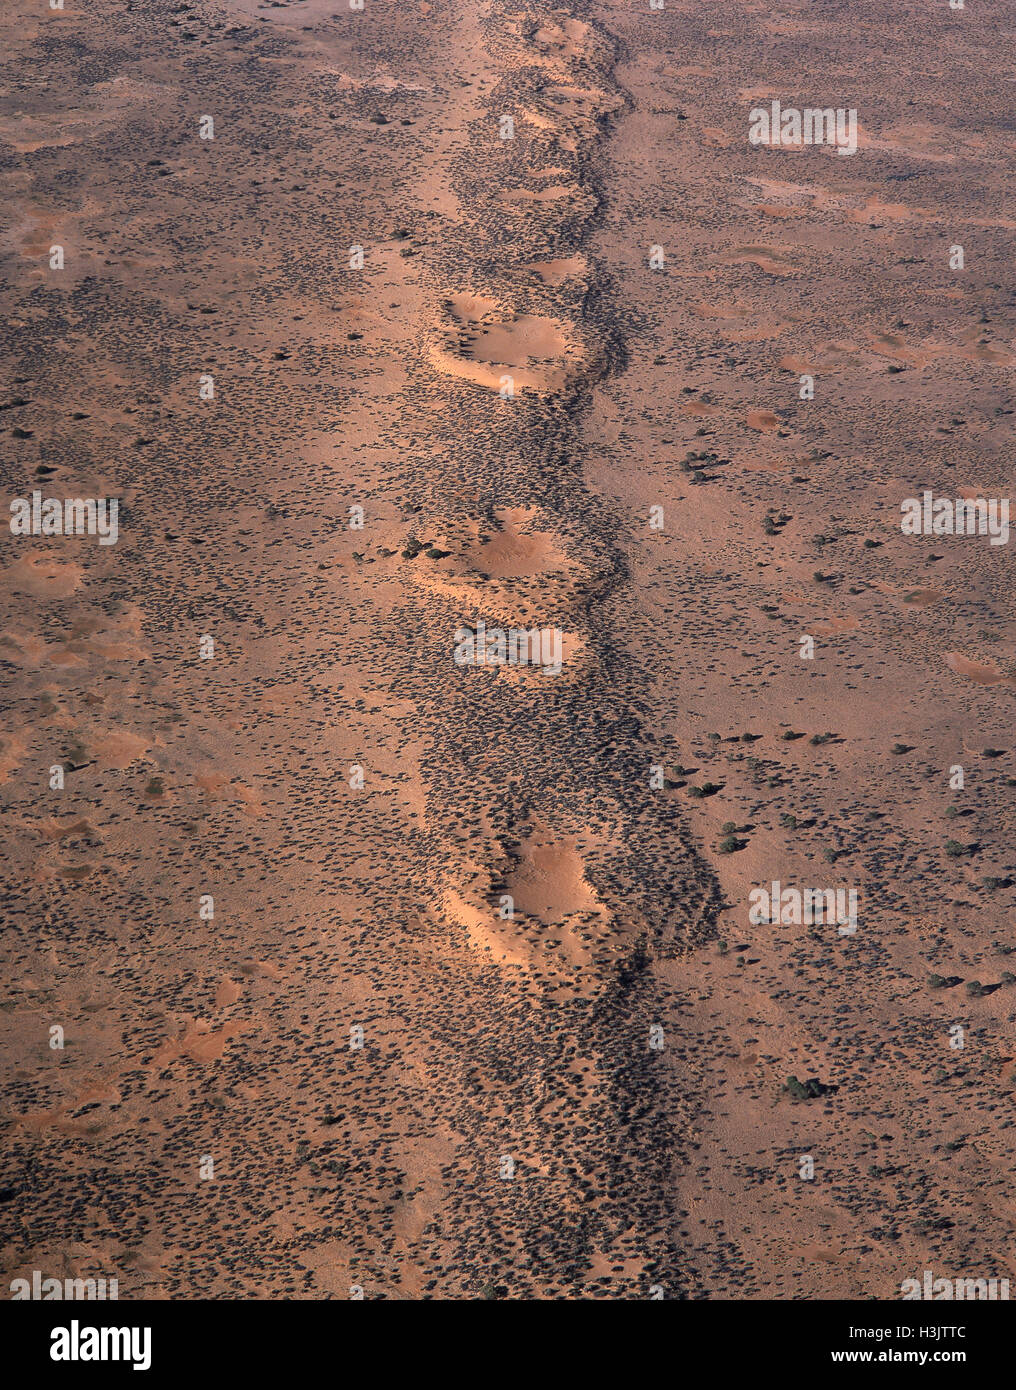 Aerial photograph of desert sand dunes, Stock Photo